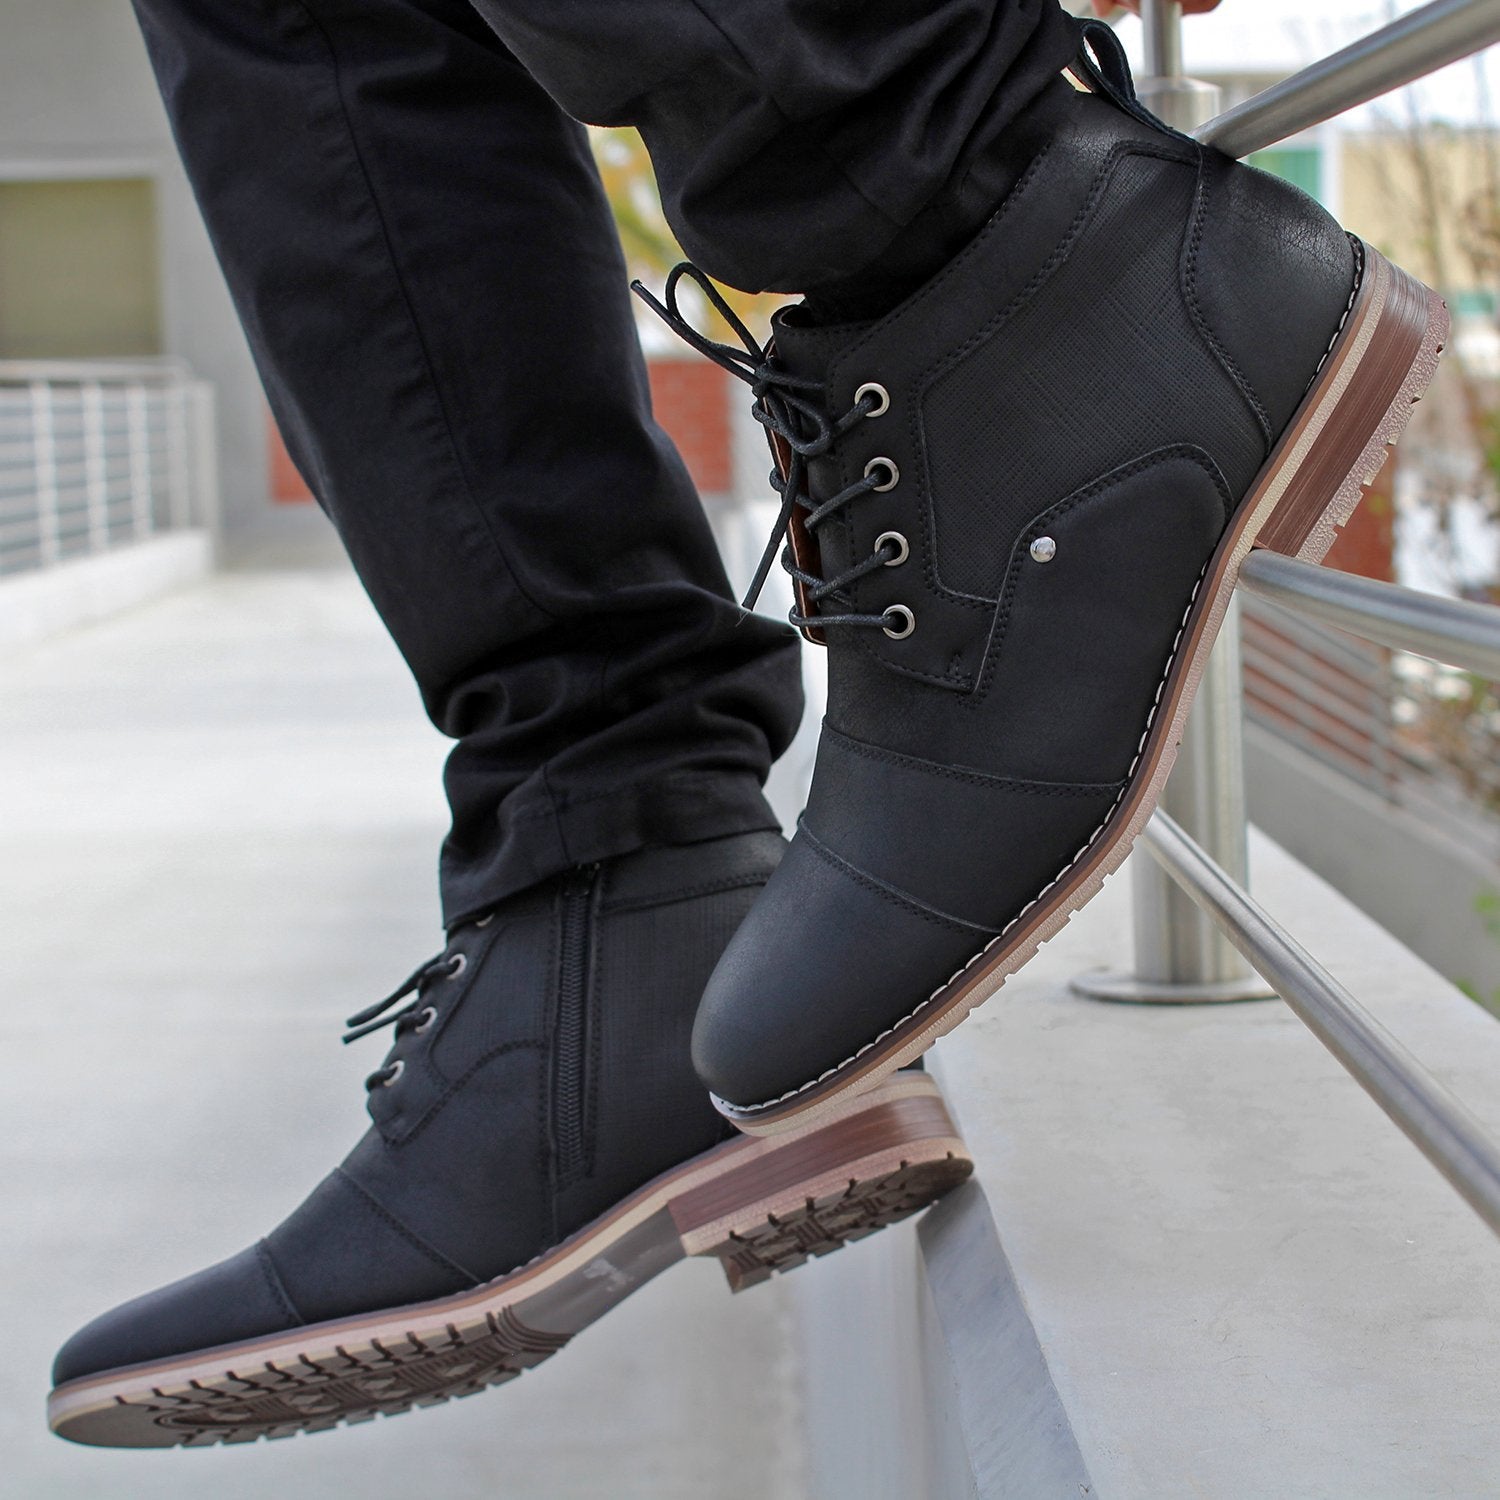 Mid-Top Zipper Boots | Blaine by Ferro Aldo | Conal Footwear | Action Shot 2 View